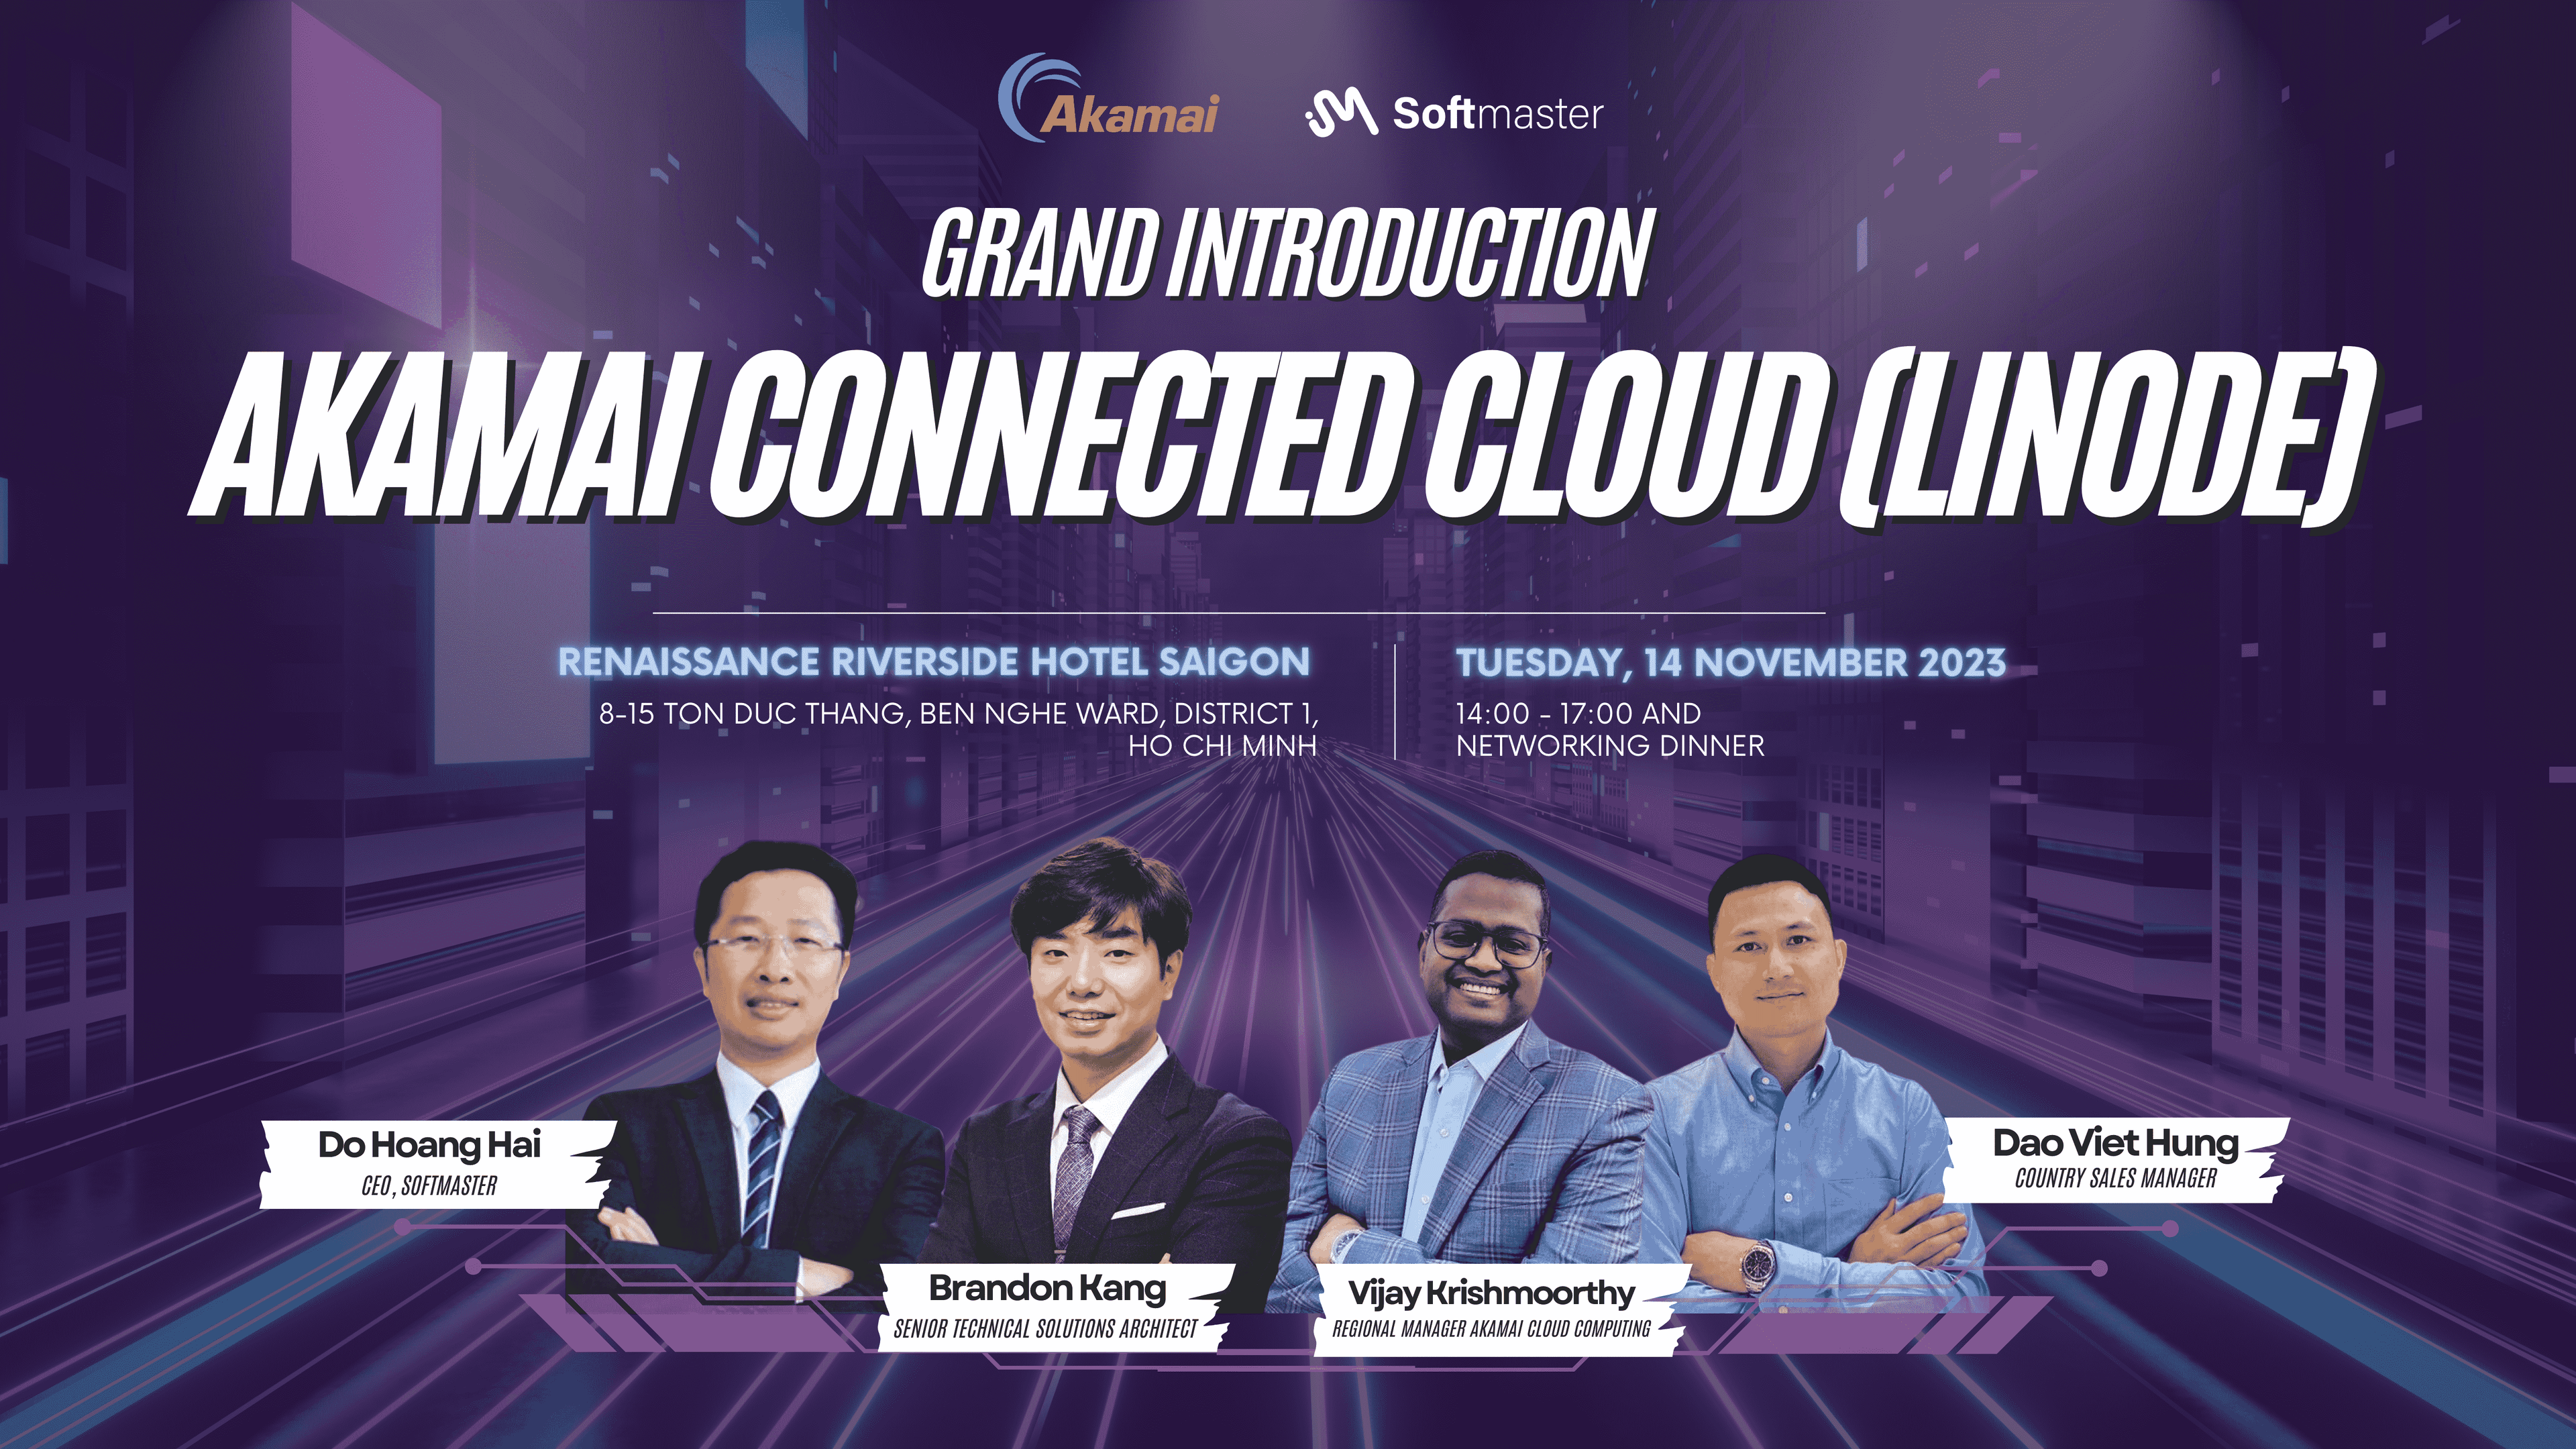 Saigon Grand Introduction:"Akamai Connected Cloud (Linode)